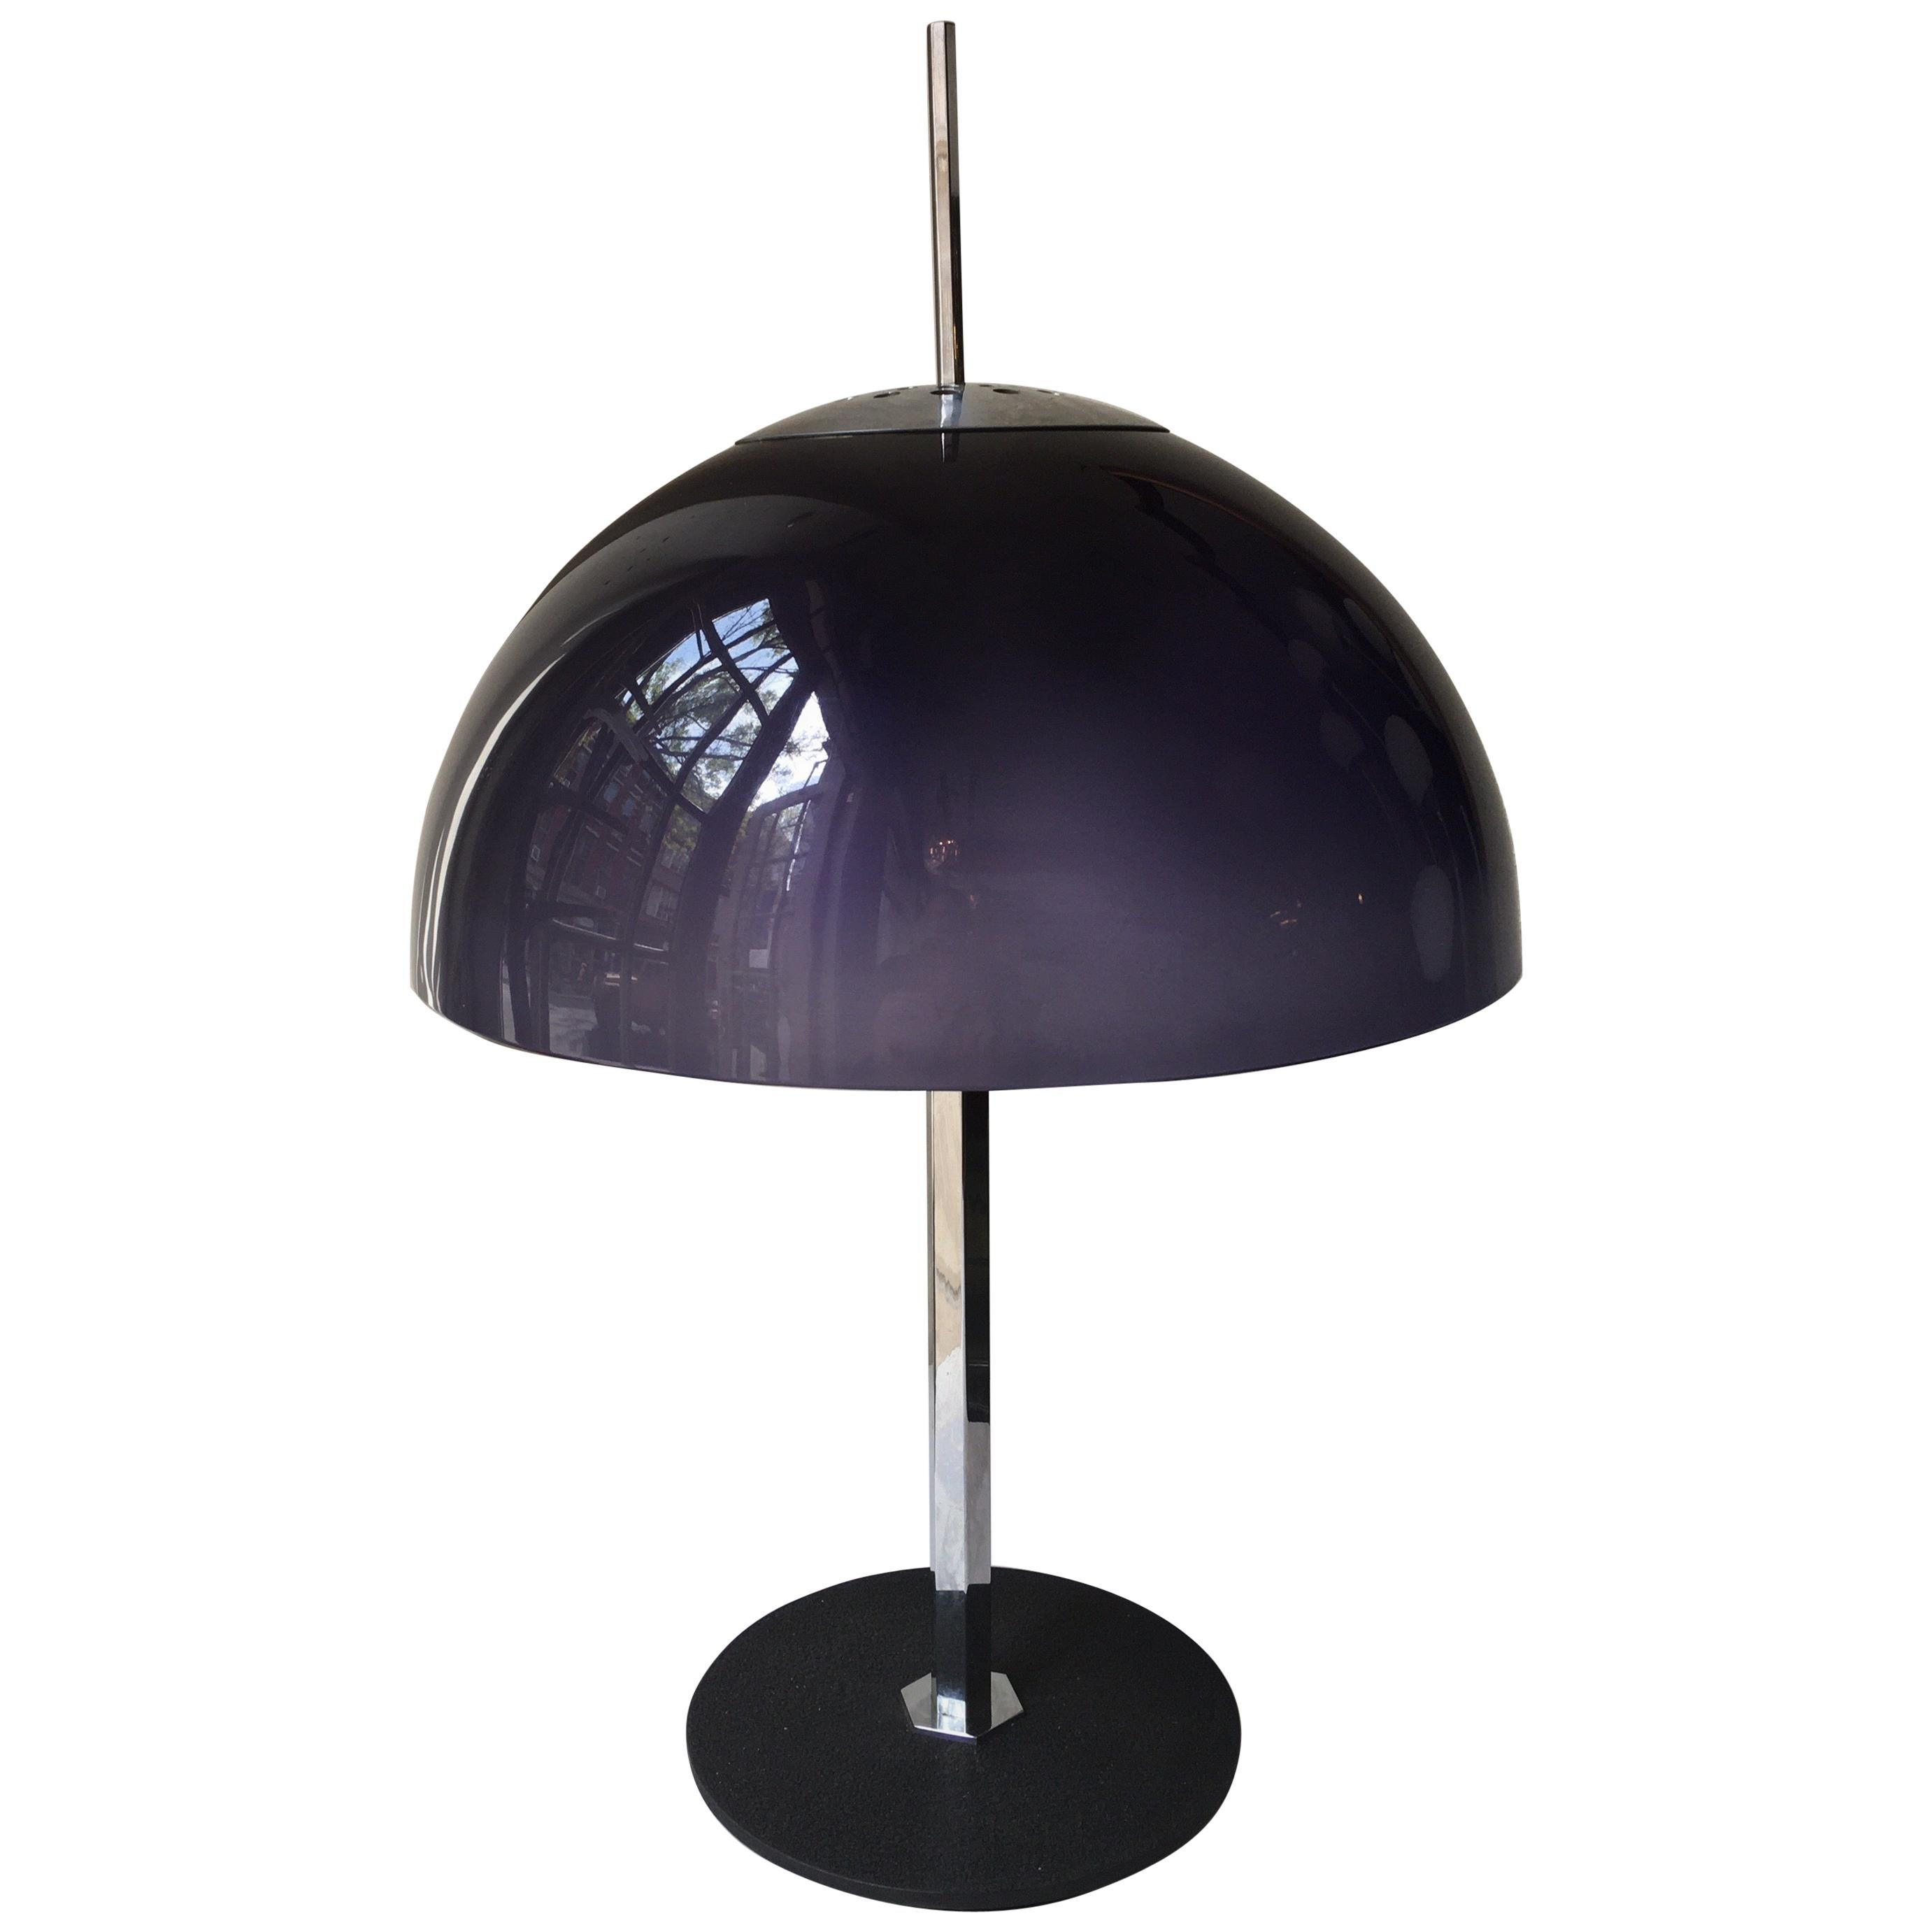 Gino Sarfatti for Arteluce Model 584/G Table Lamp